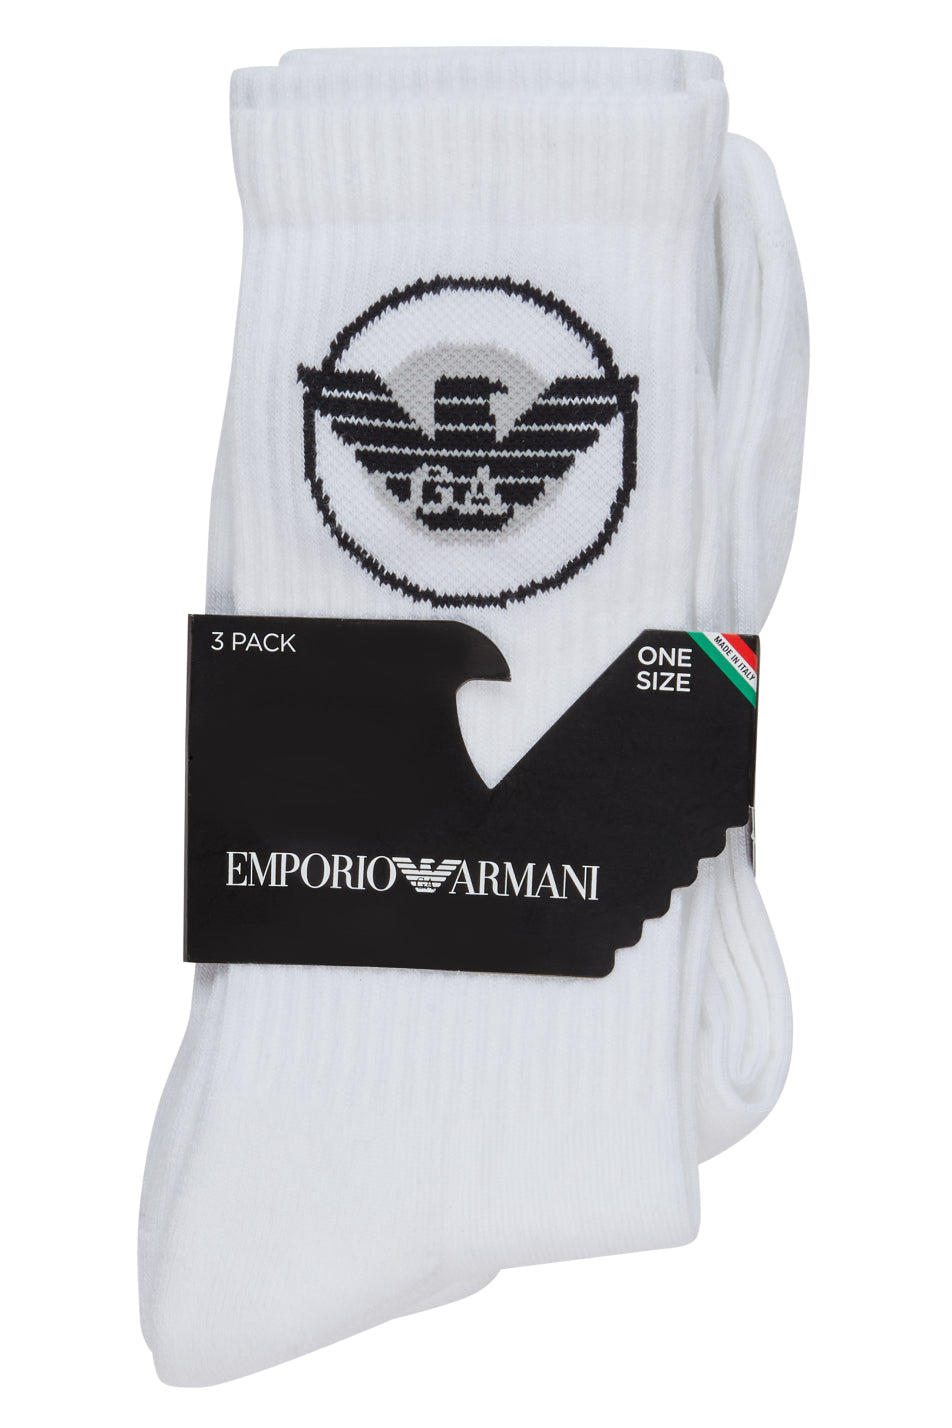 Emporio Armani Men's 3 Pack Knit Sock